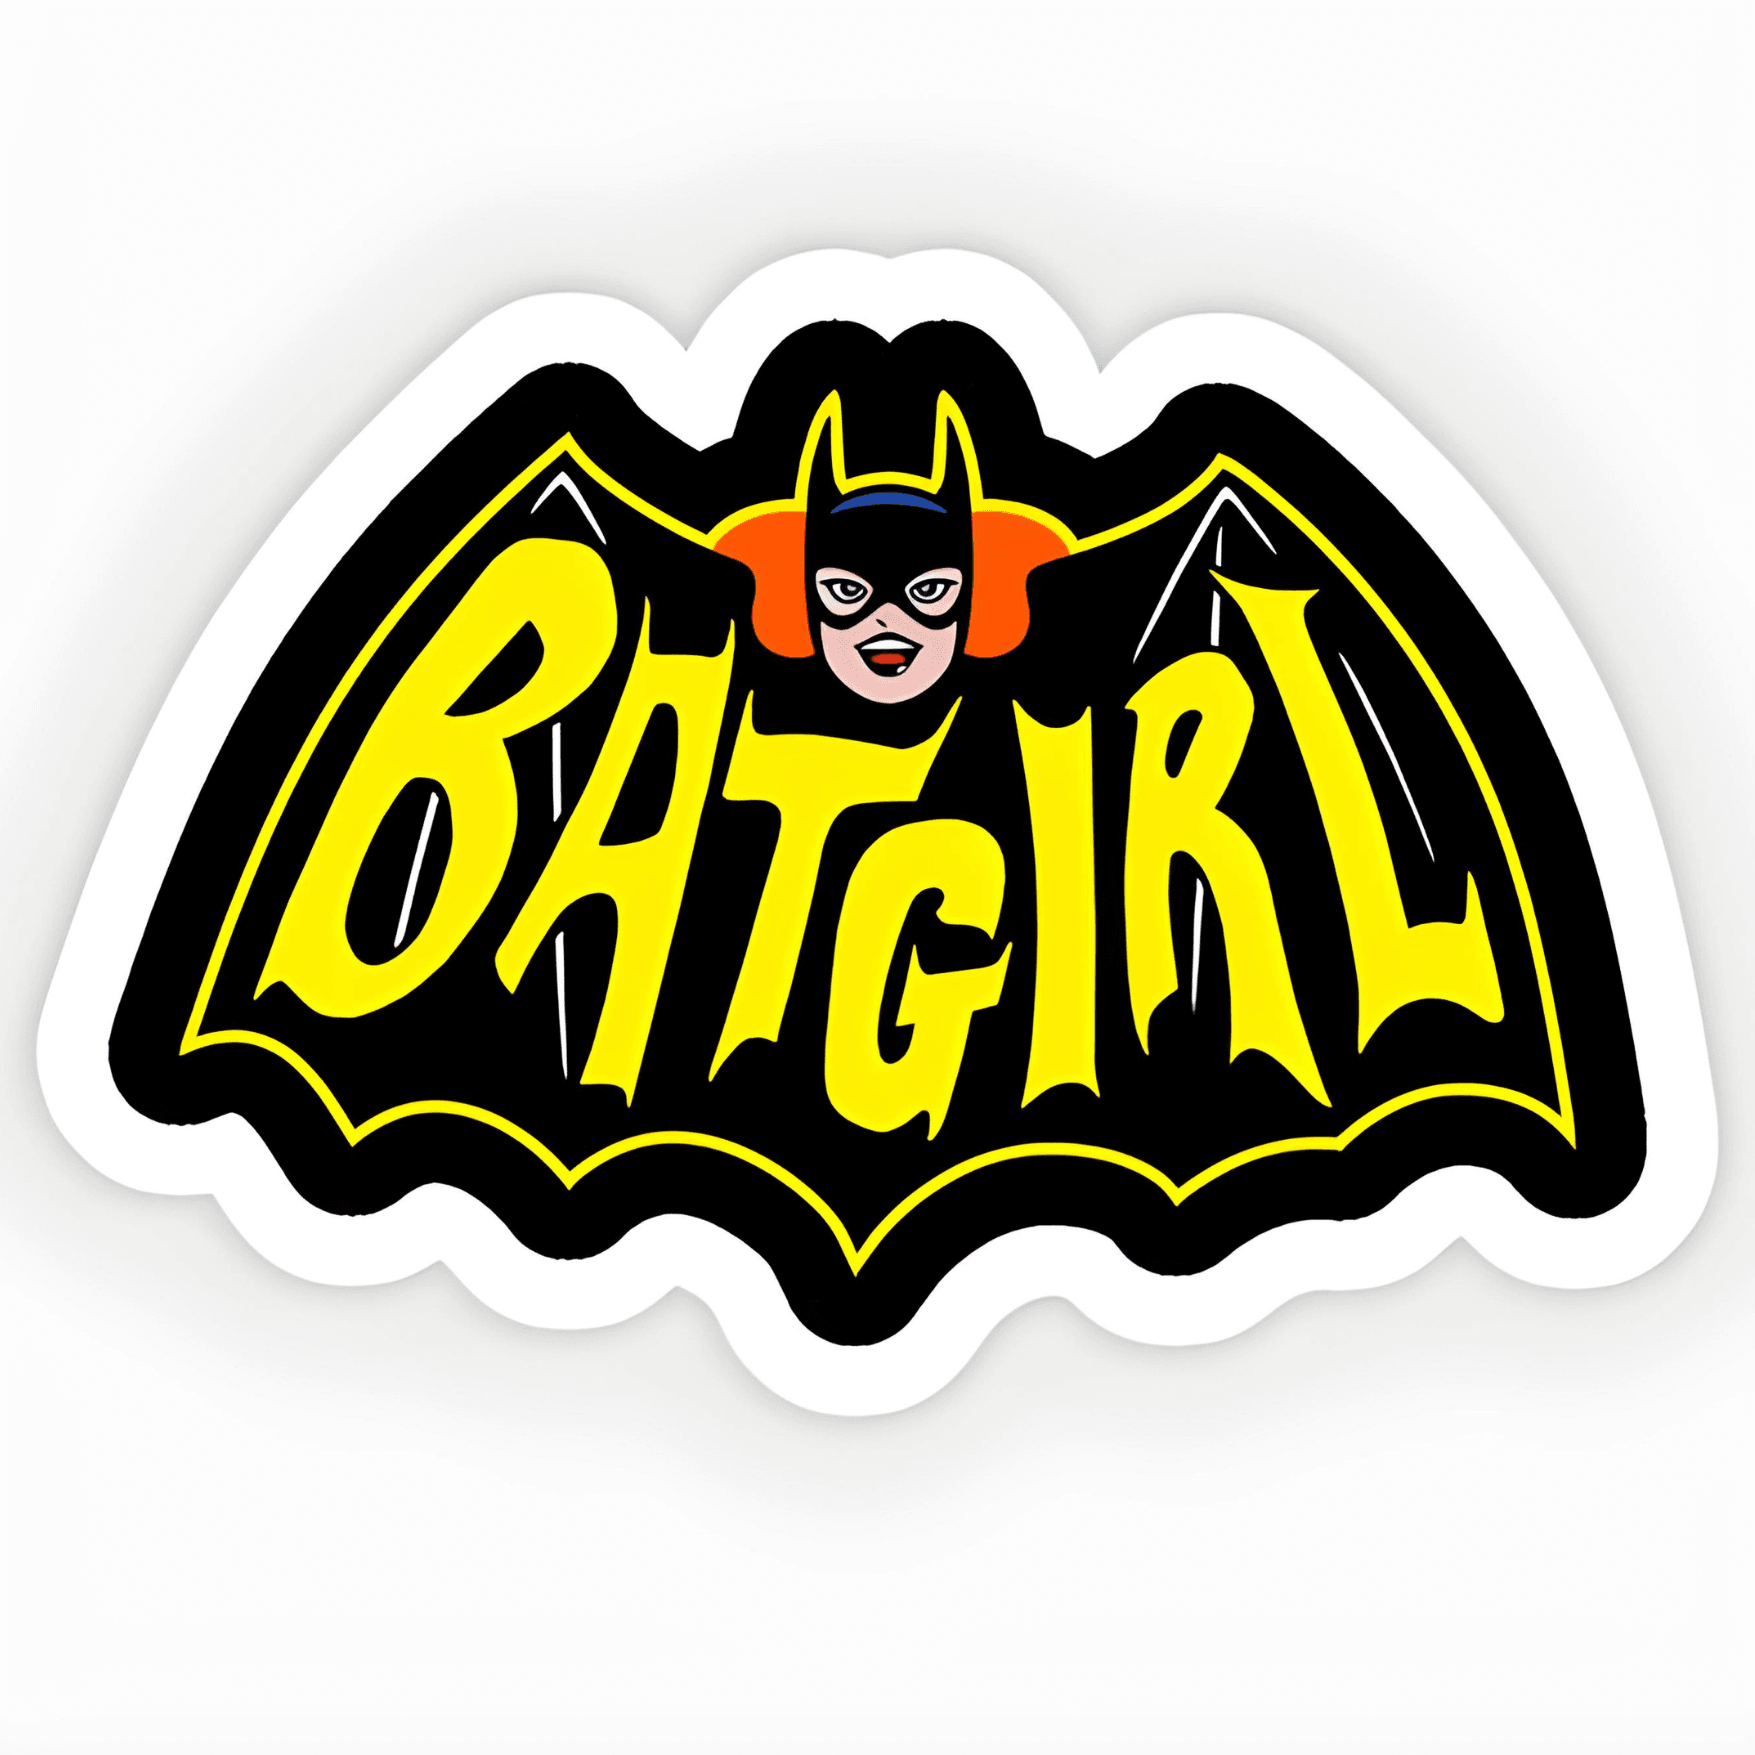 Batgirl sticker 6cm